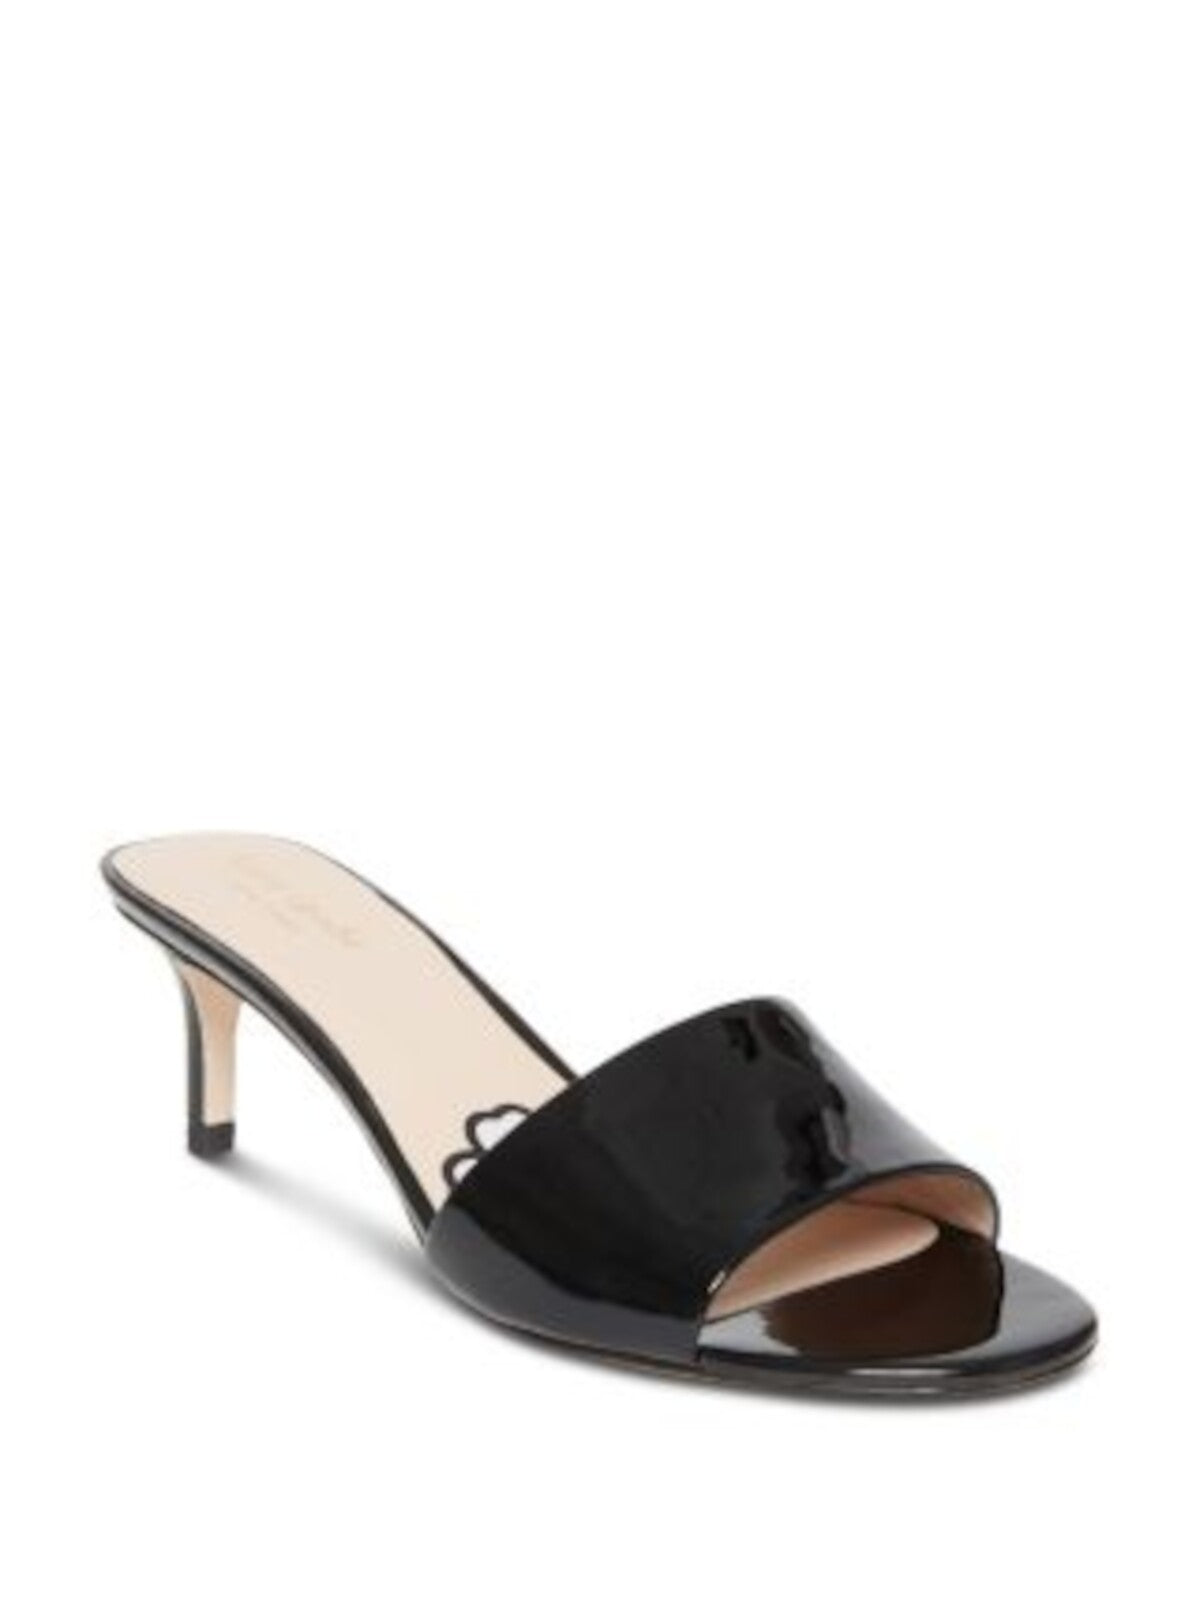 KATE SPADE NEW YORK Womens Black Padded Savvi Round Toe Kitten Heel Slip On Dress Sandals Shoes 5 M